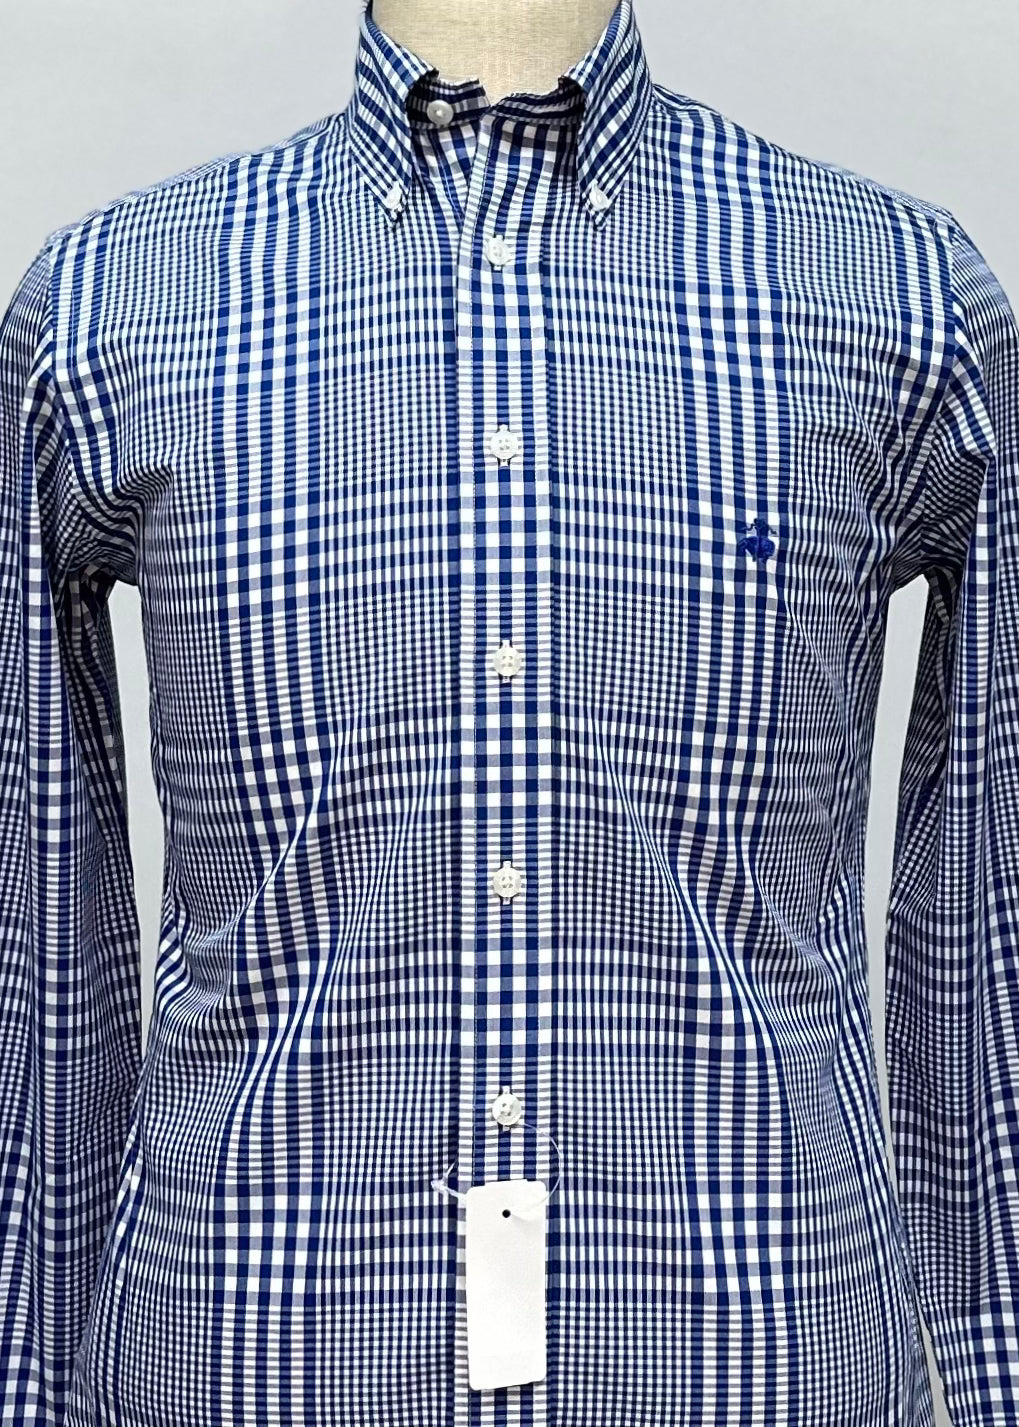 Camisa Brooks Brothers 🐑 color blanco con cuadros en azul Talla S Entalle Regular